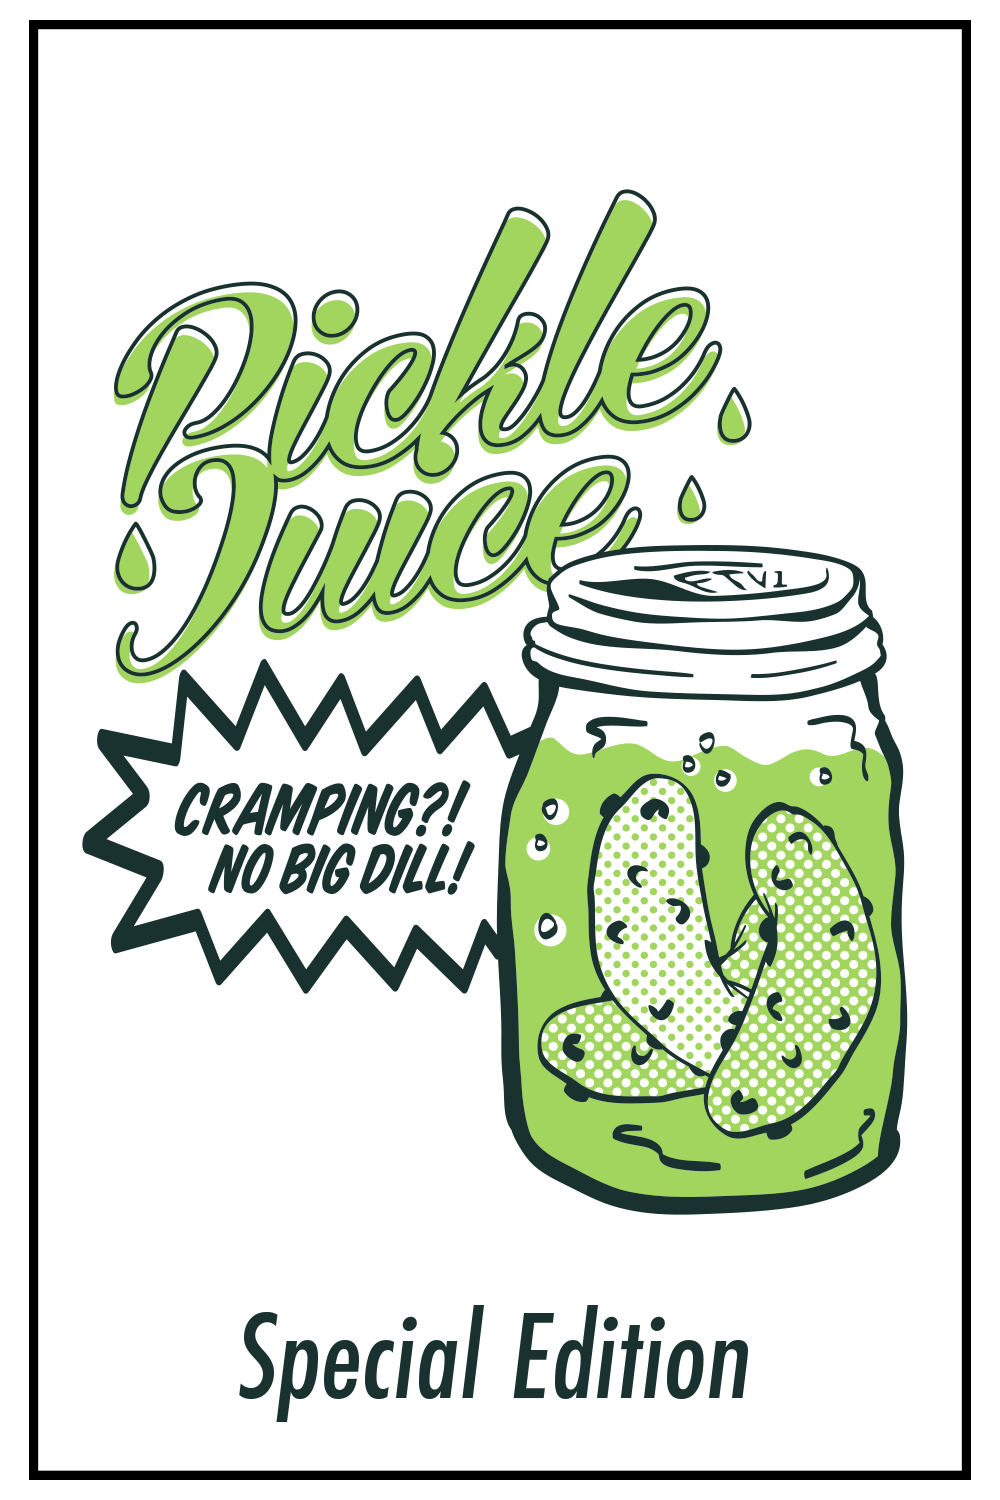 Pickle Juice Tank